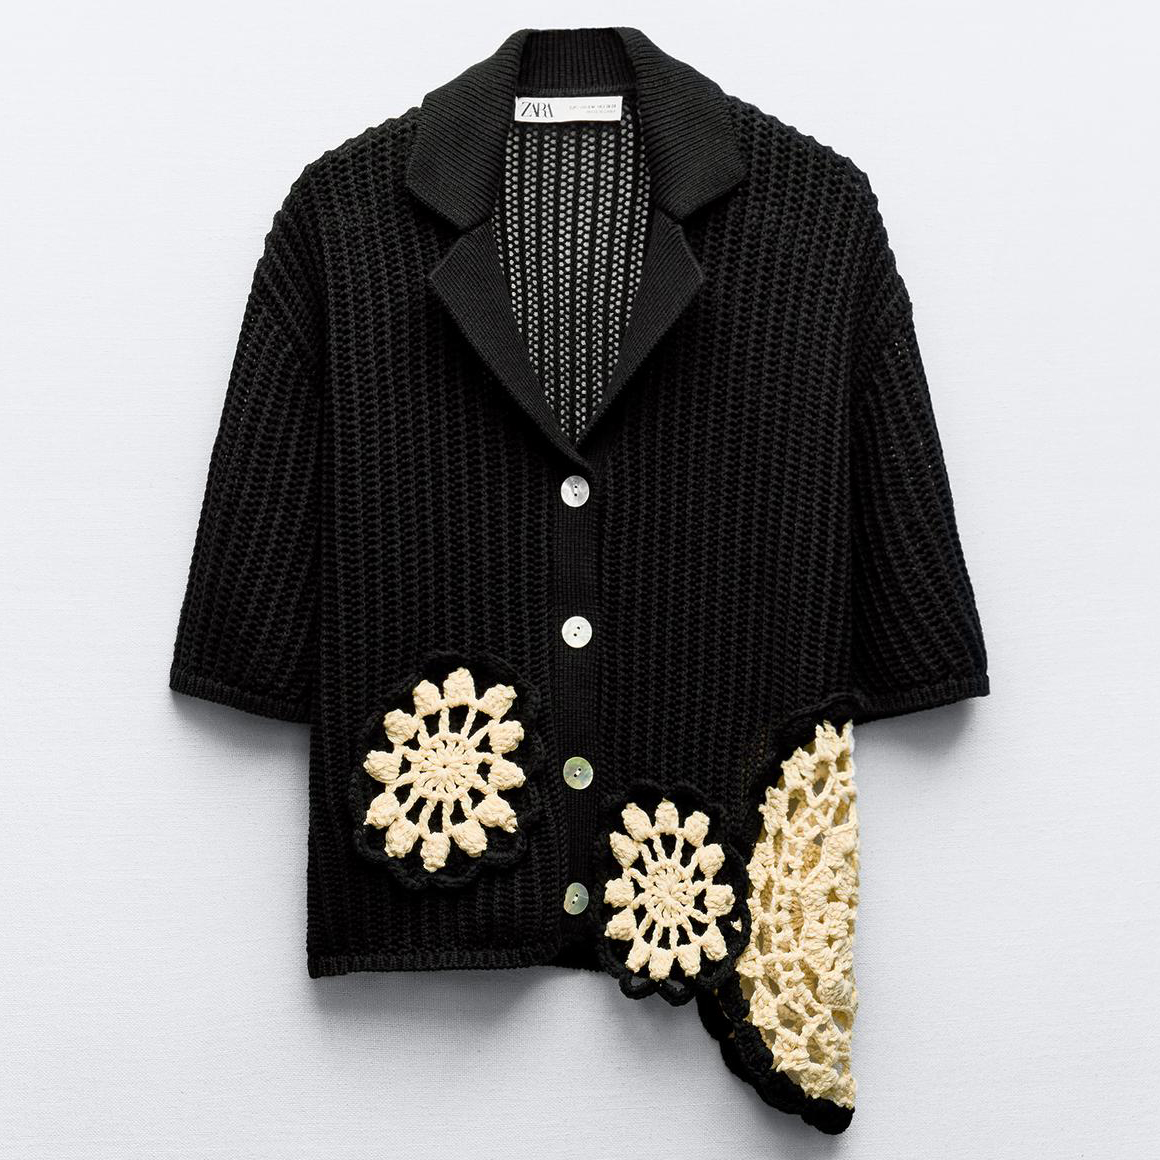 Кардиган Zara Crochet Knit, черный кардиган zara knit wrap серый